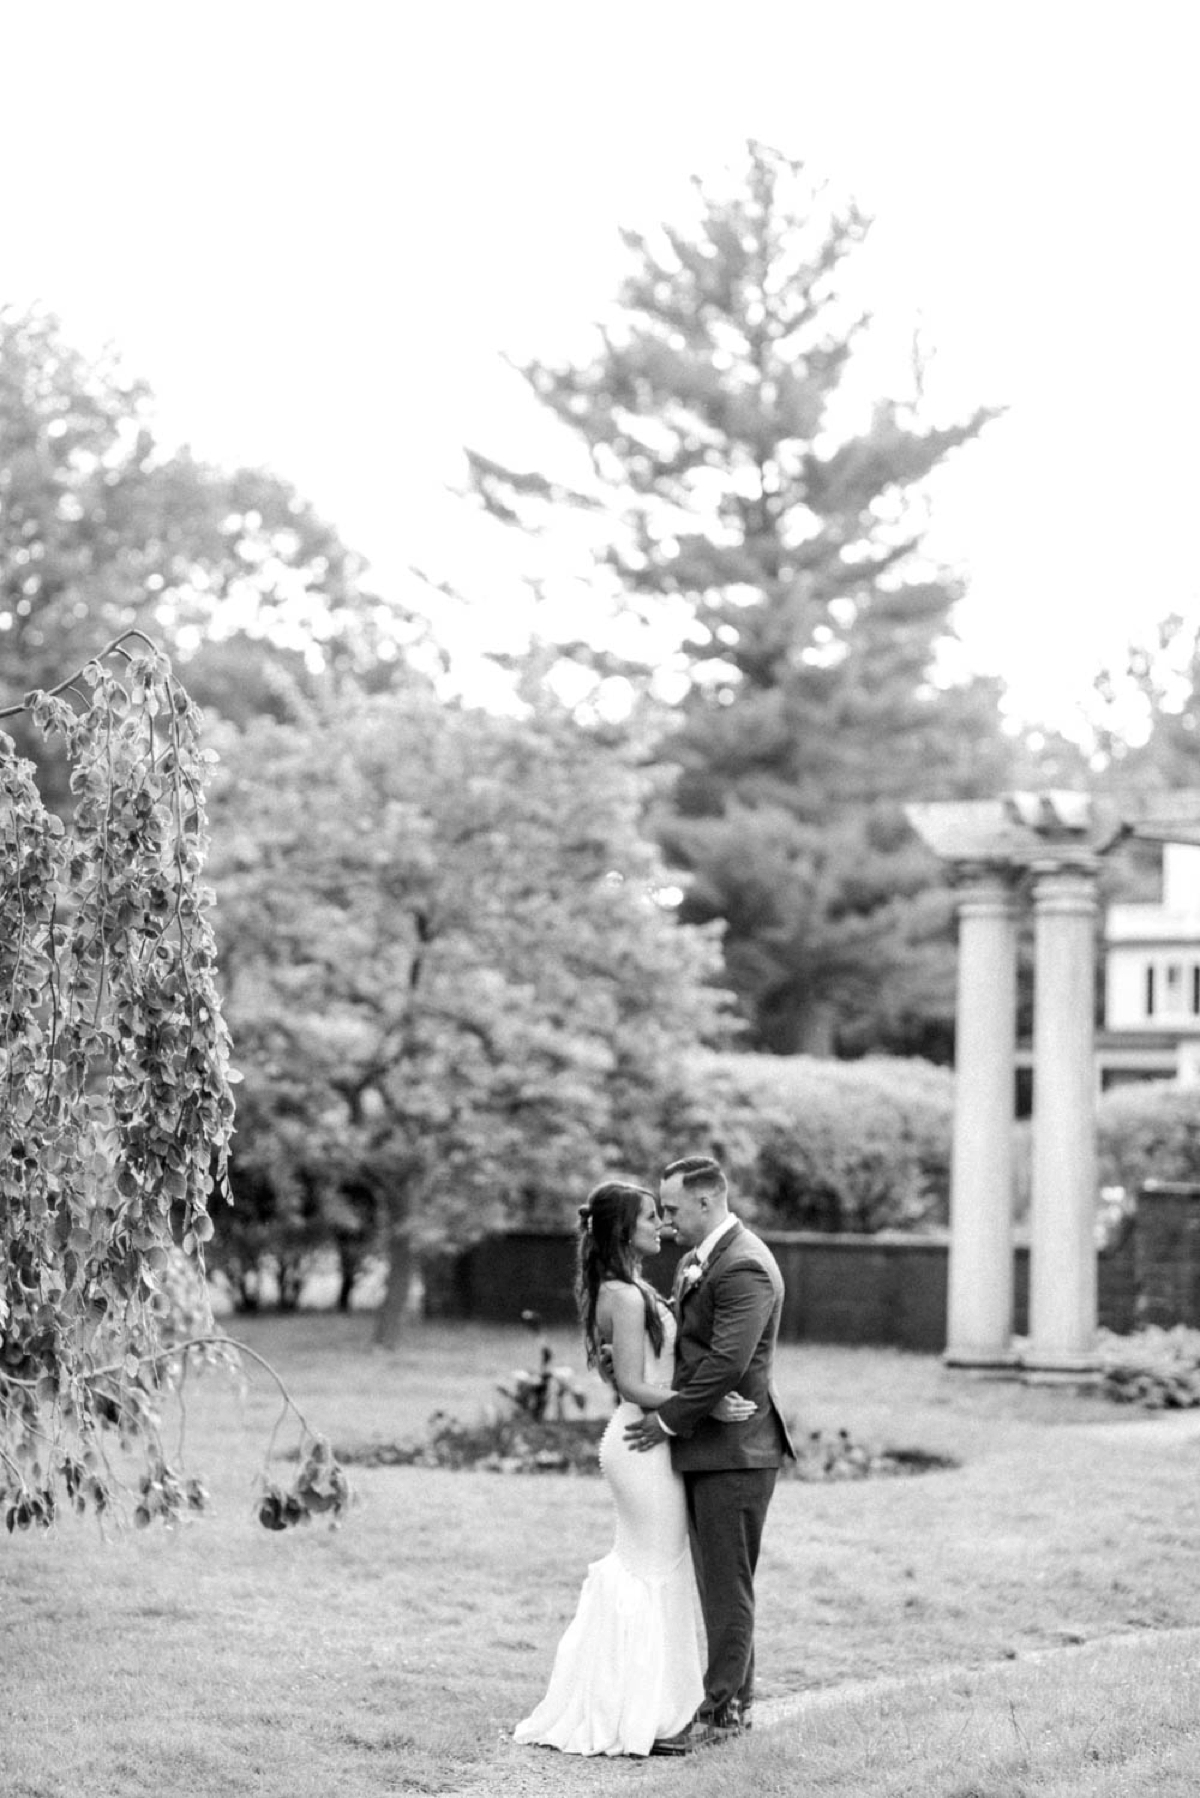 Garden Inspired Summer Wedding at Glen Magna Farms in Danvers, Massachusetts by Boston Wedding Photographer Annmarie Swift - Bride & groom portraits